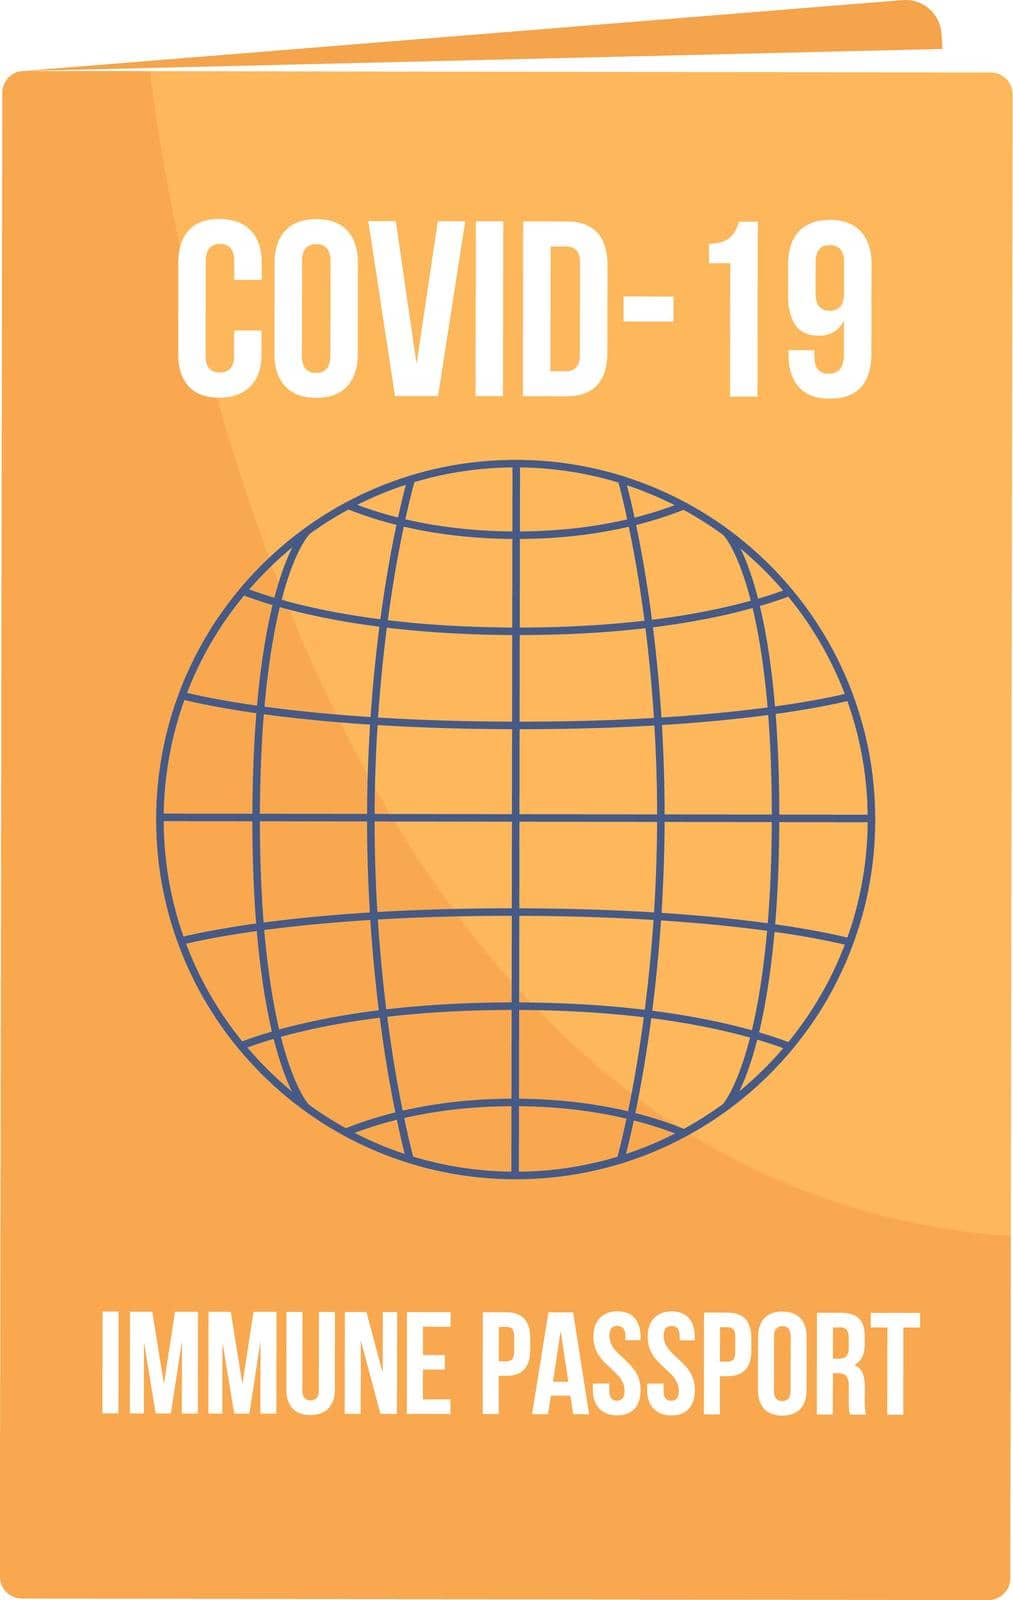 Covid19 immunity passport semi flat color vector object by ntl